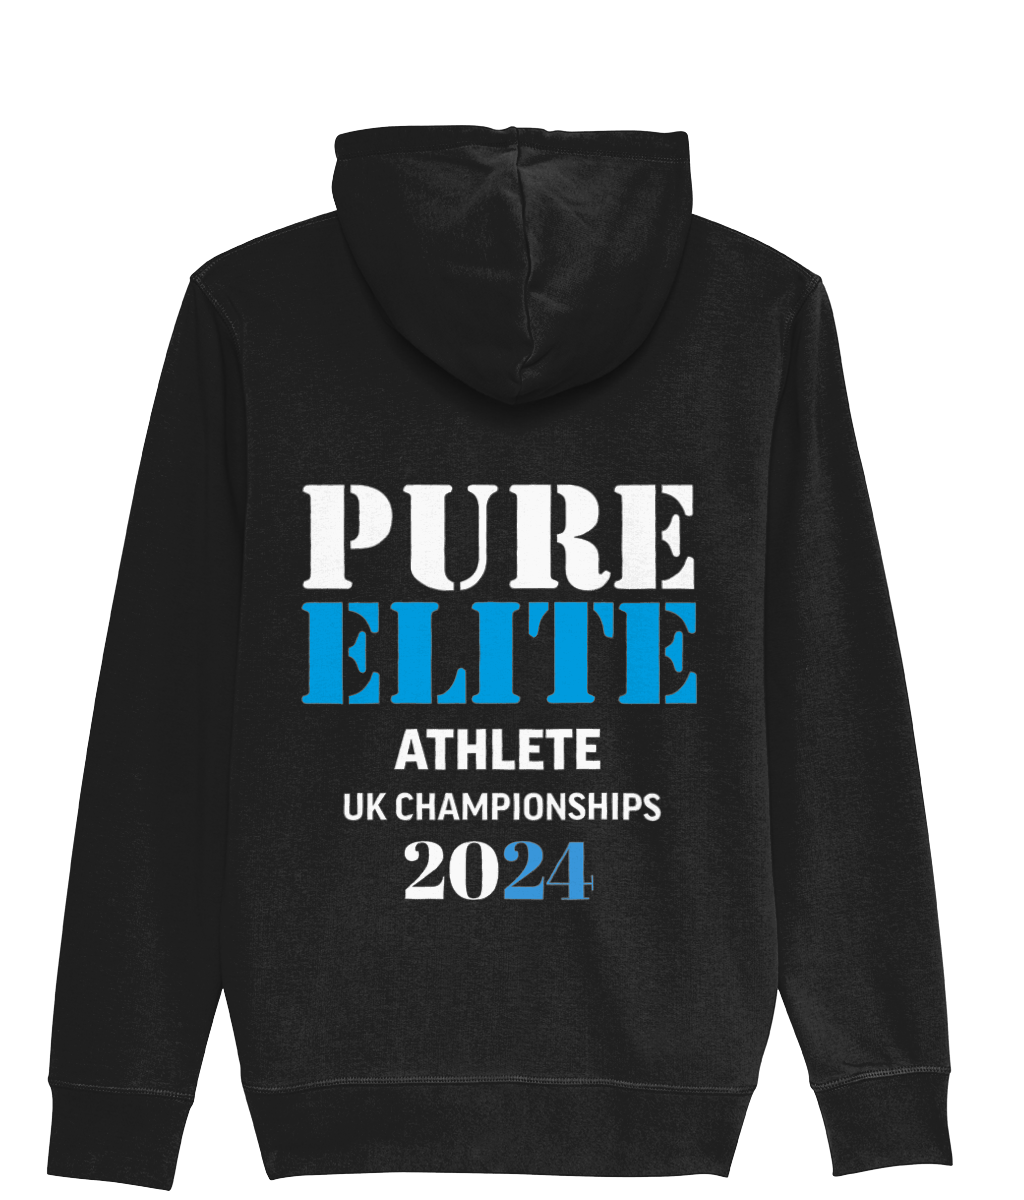 Pure Elite Athlete Zip-Up Hoodie UK Championships 2024